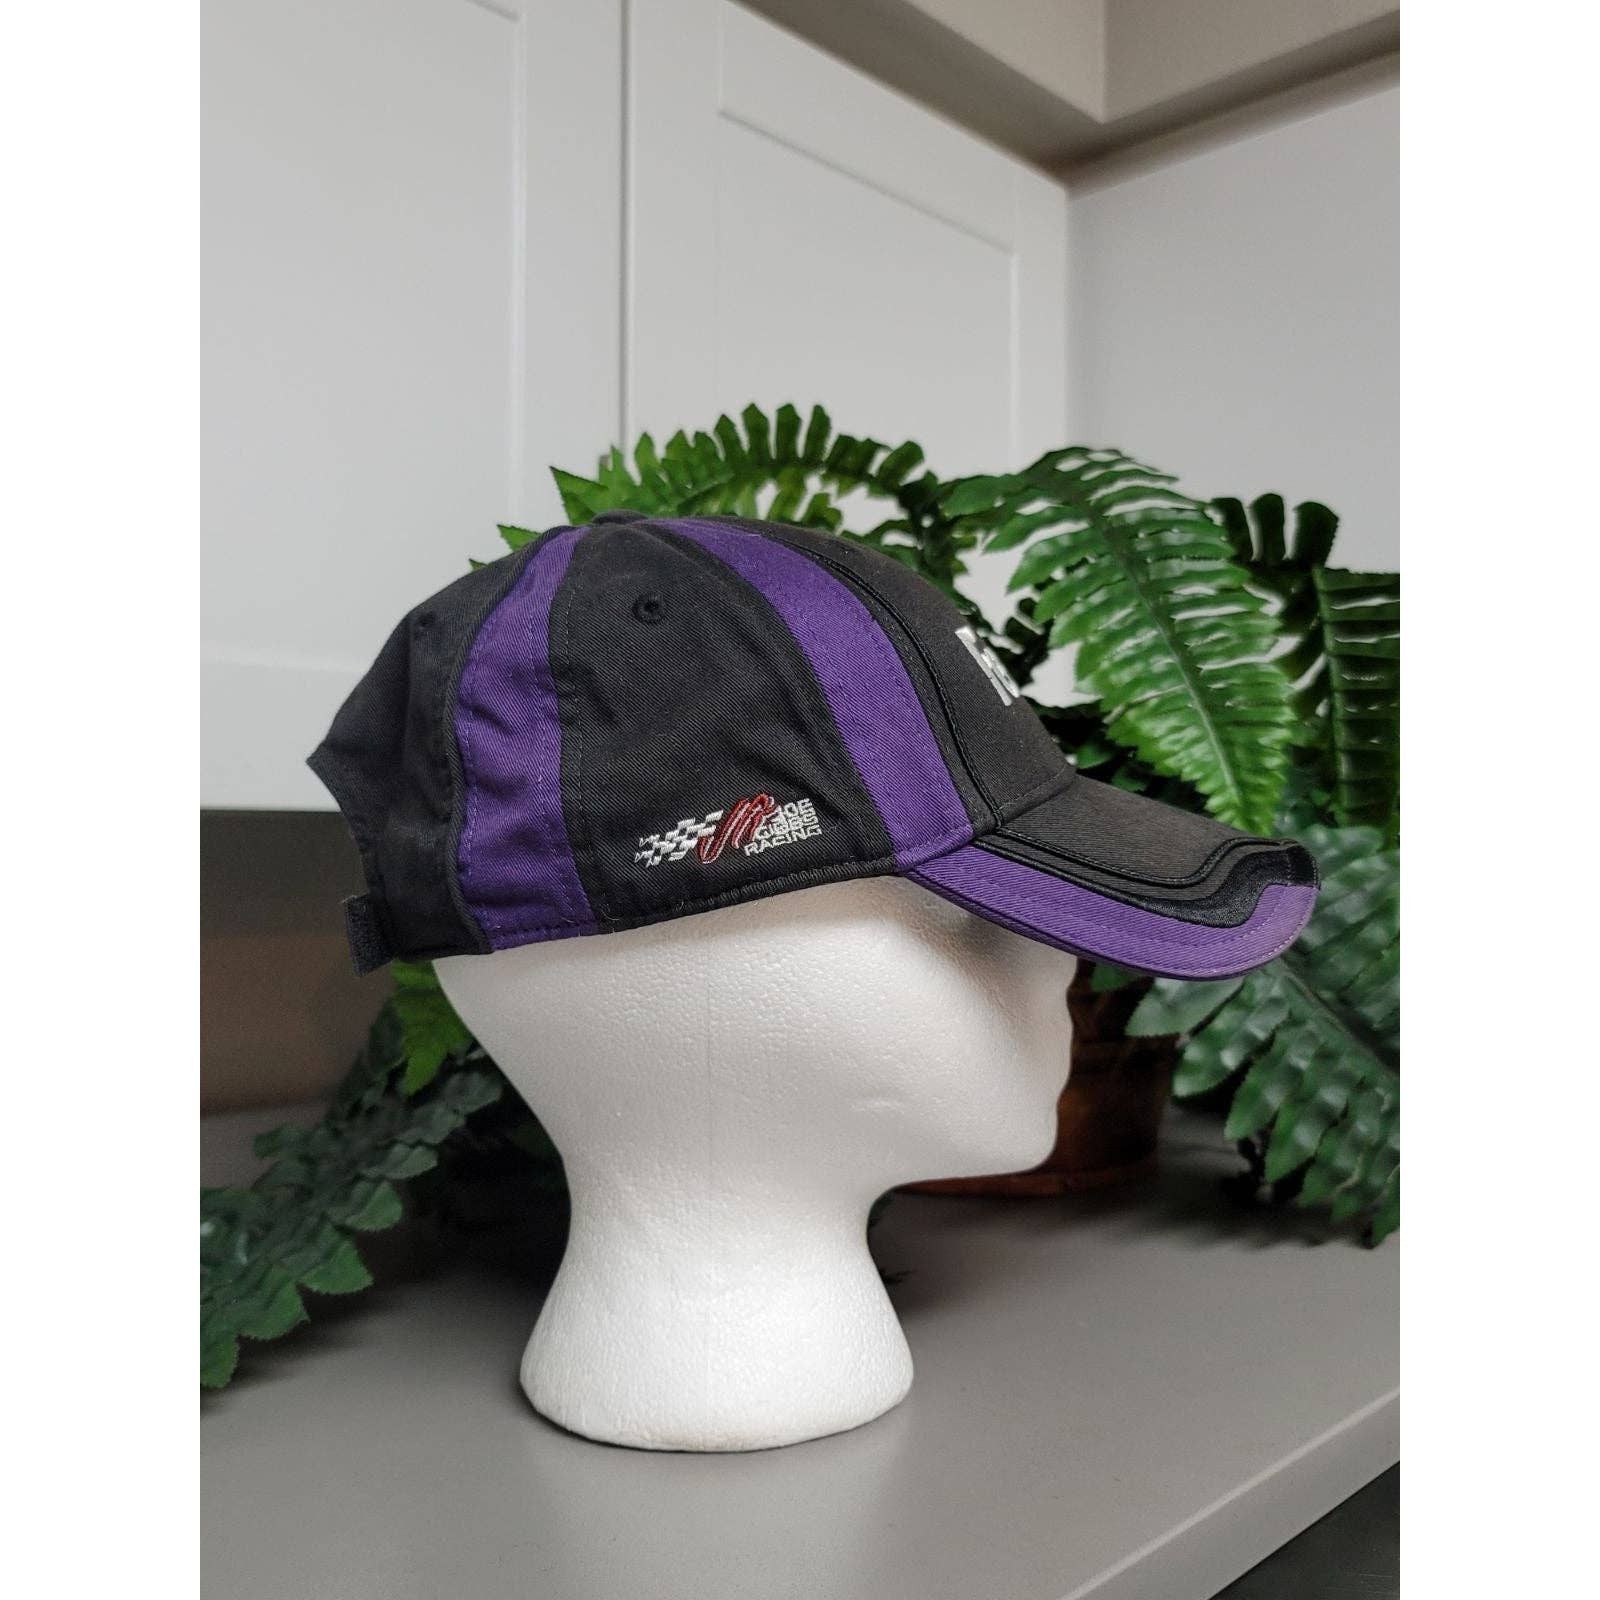 Chase Authentics Vtg Chase Authentics FedEx Racing Hat Size ONE SIZE - 4 Thumbnail